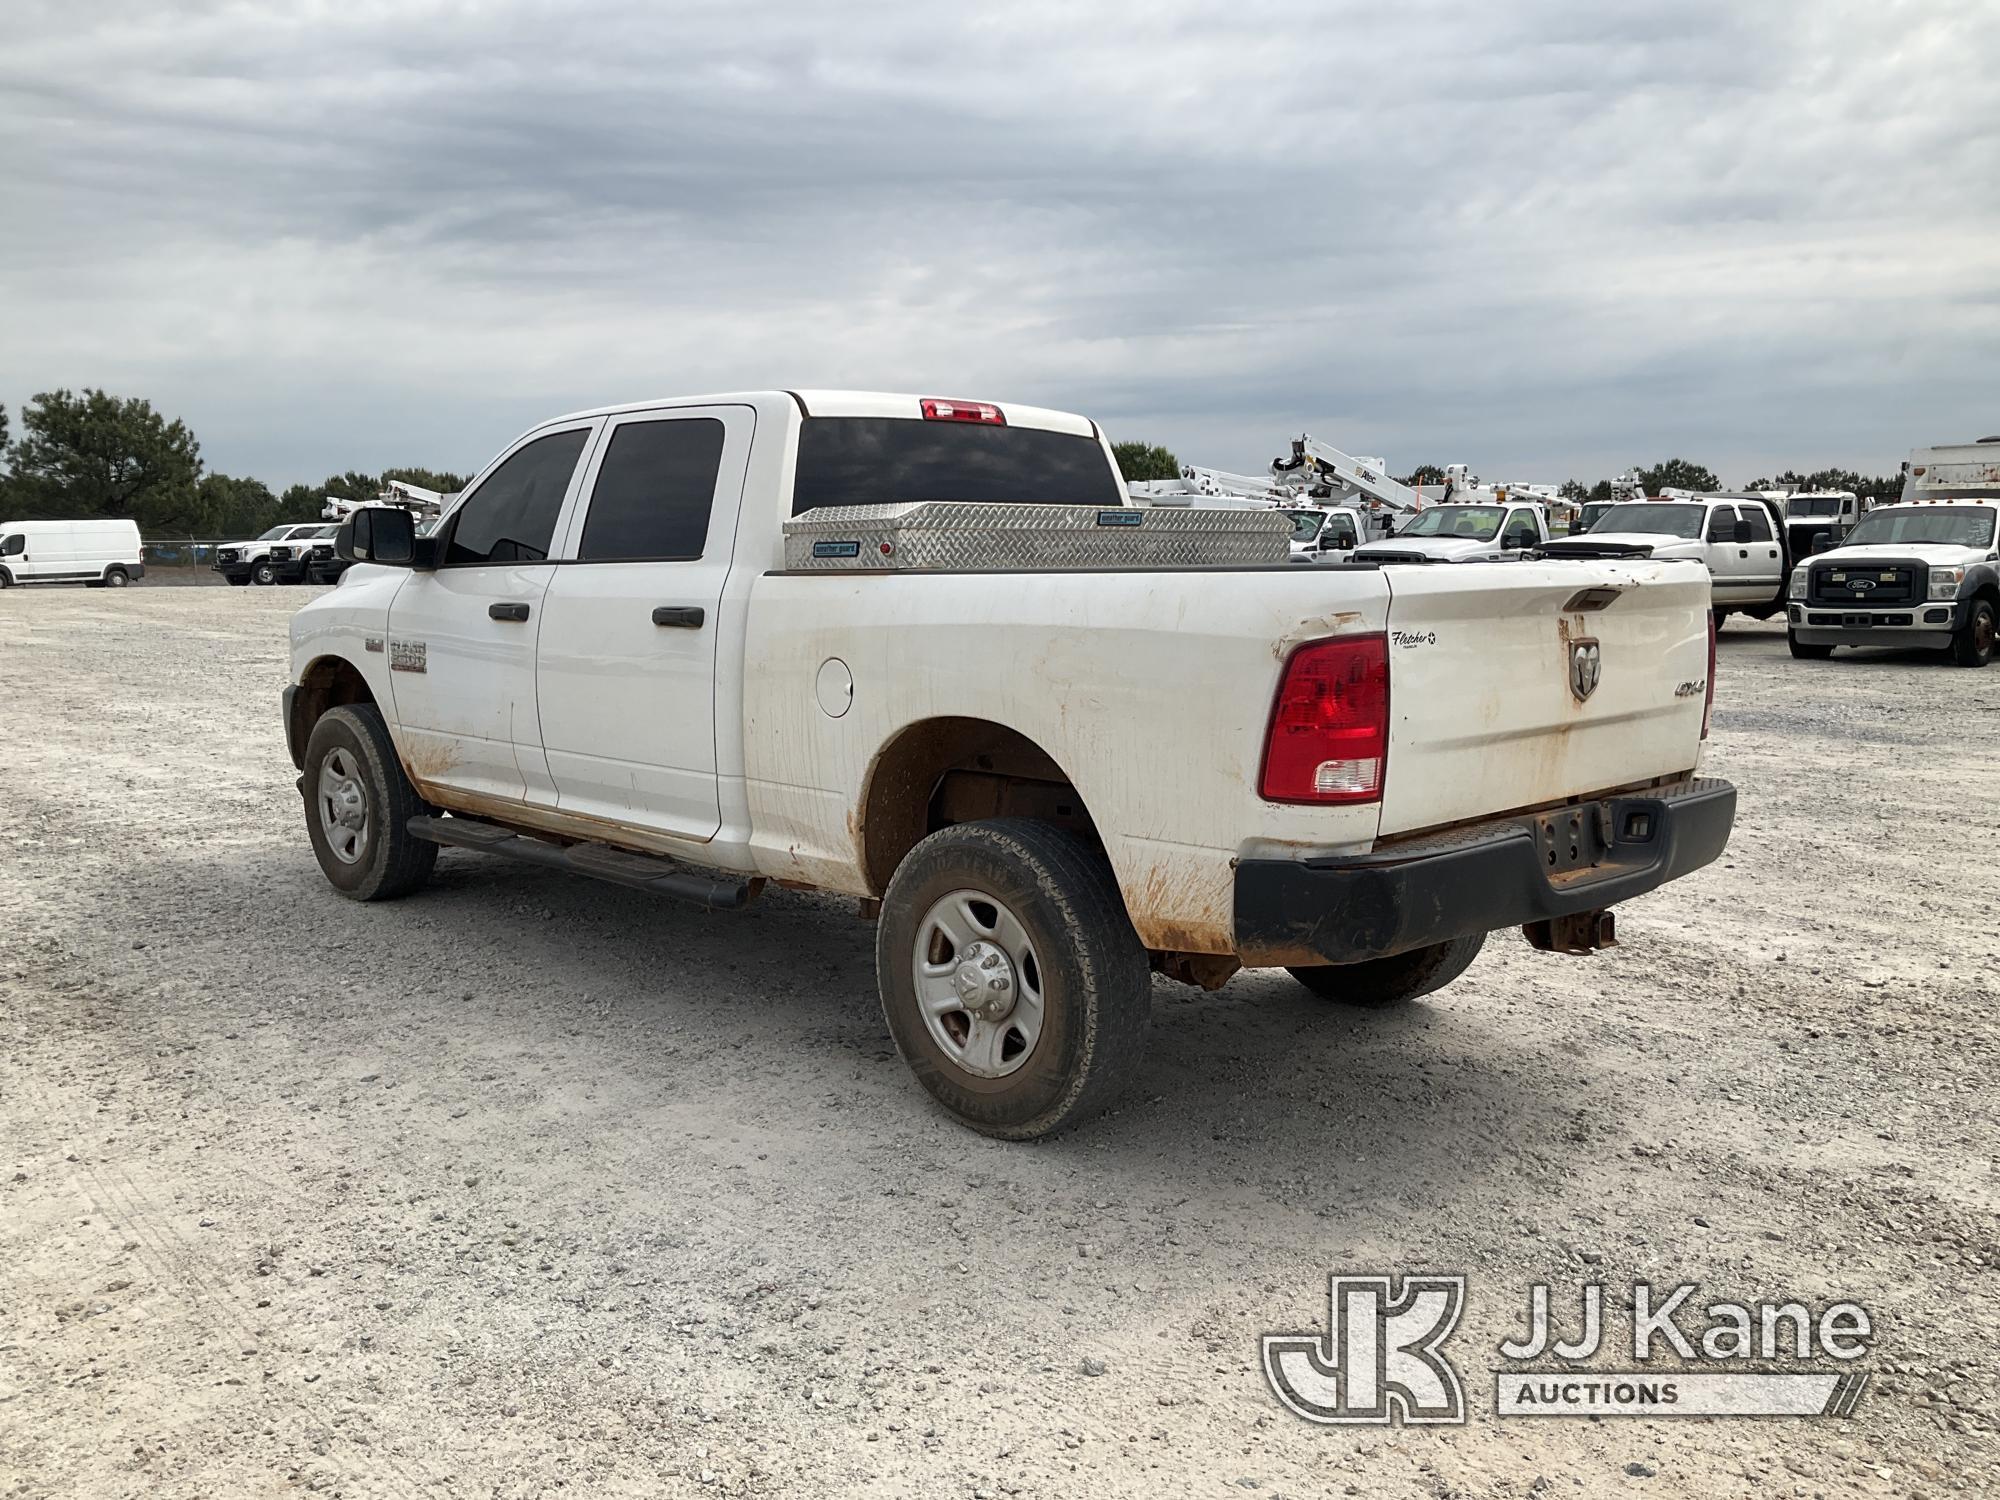 (Villa Rica, GA) 2018 RAM 2500 4x4 Crew-Cab Pickup Truck Runs & Moves) (Check Engine Light On, ABS L